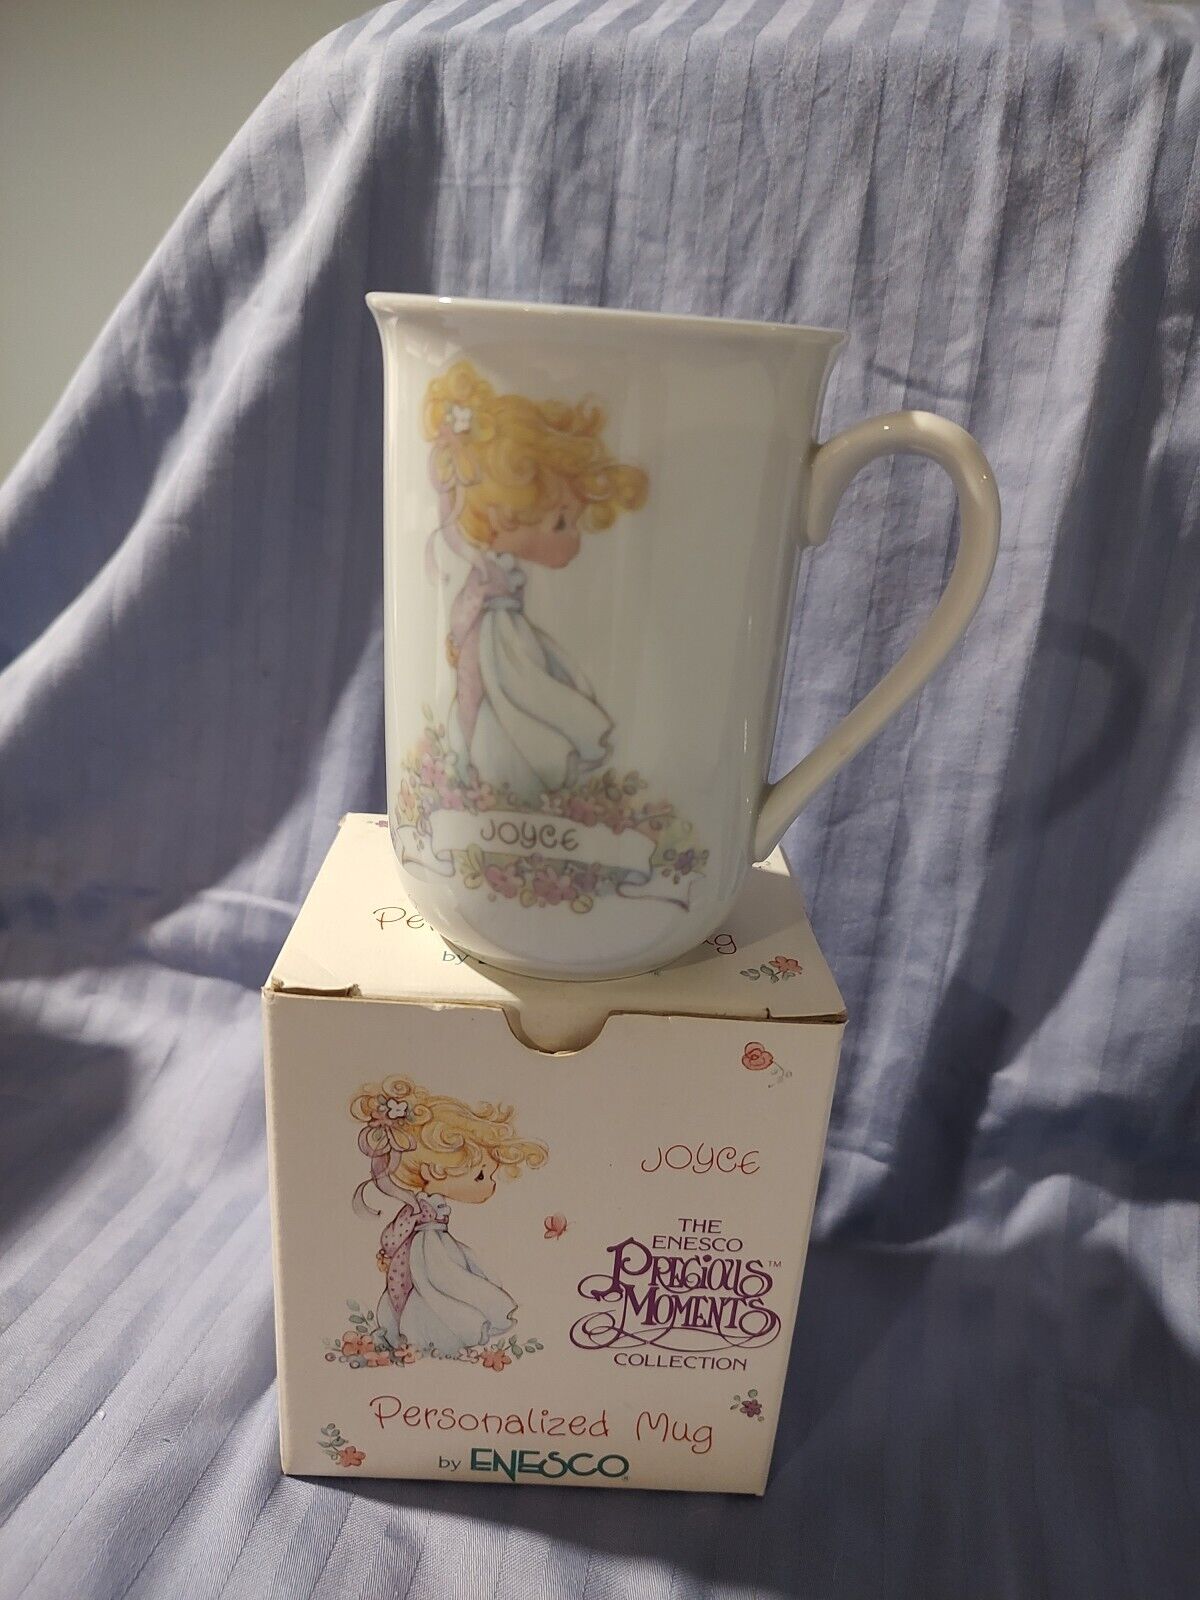 Precious Moments Personalized Mug #514616 - Joyce - Original Box